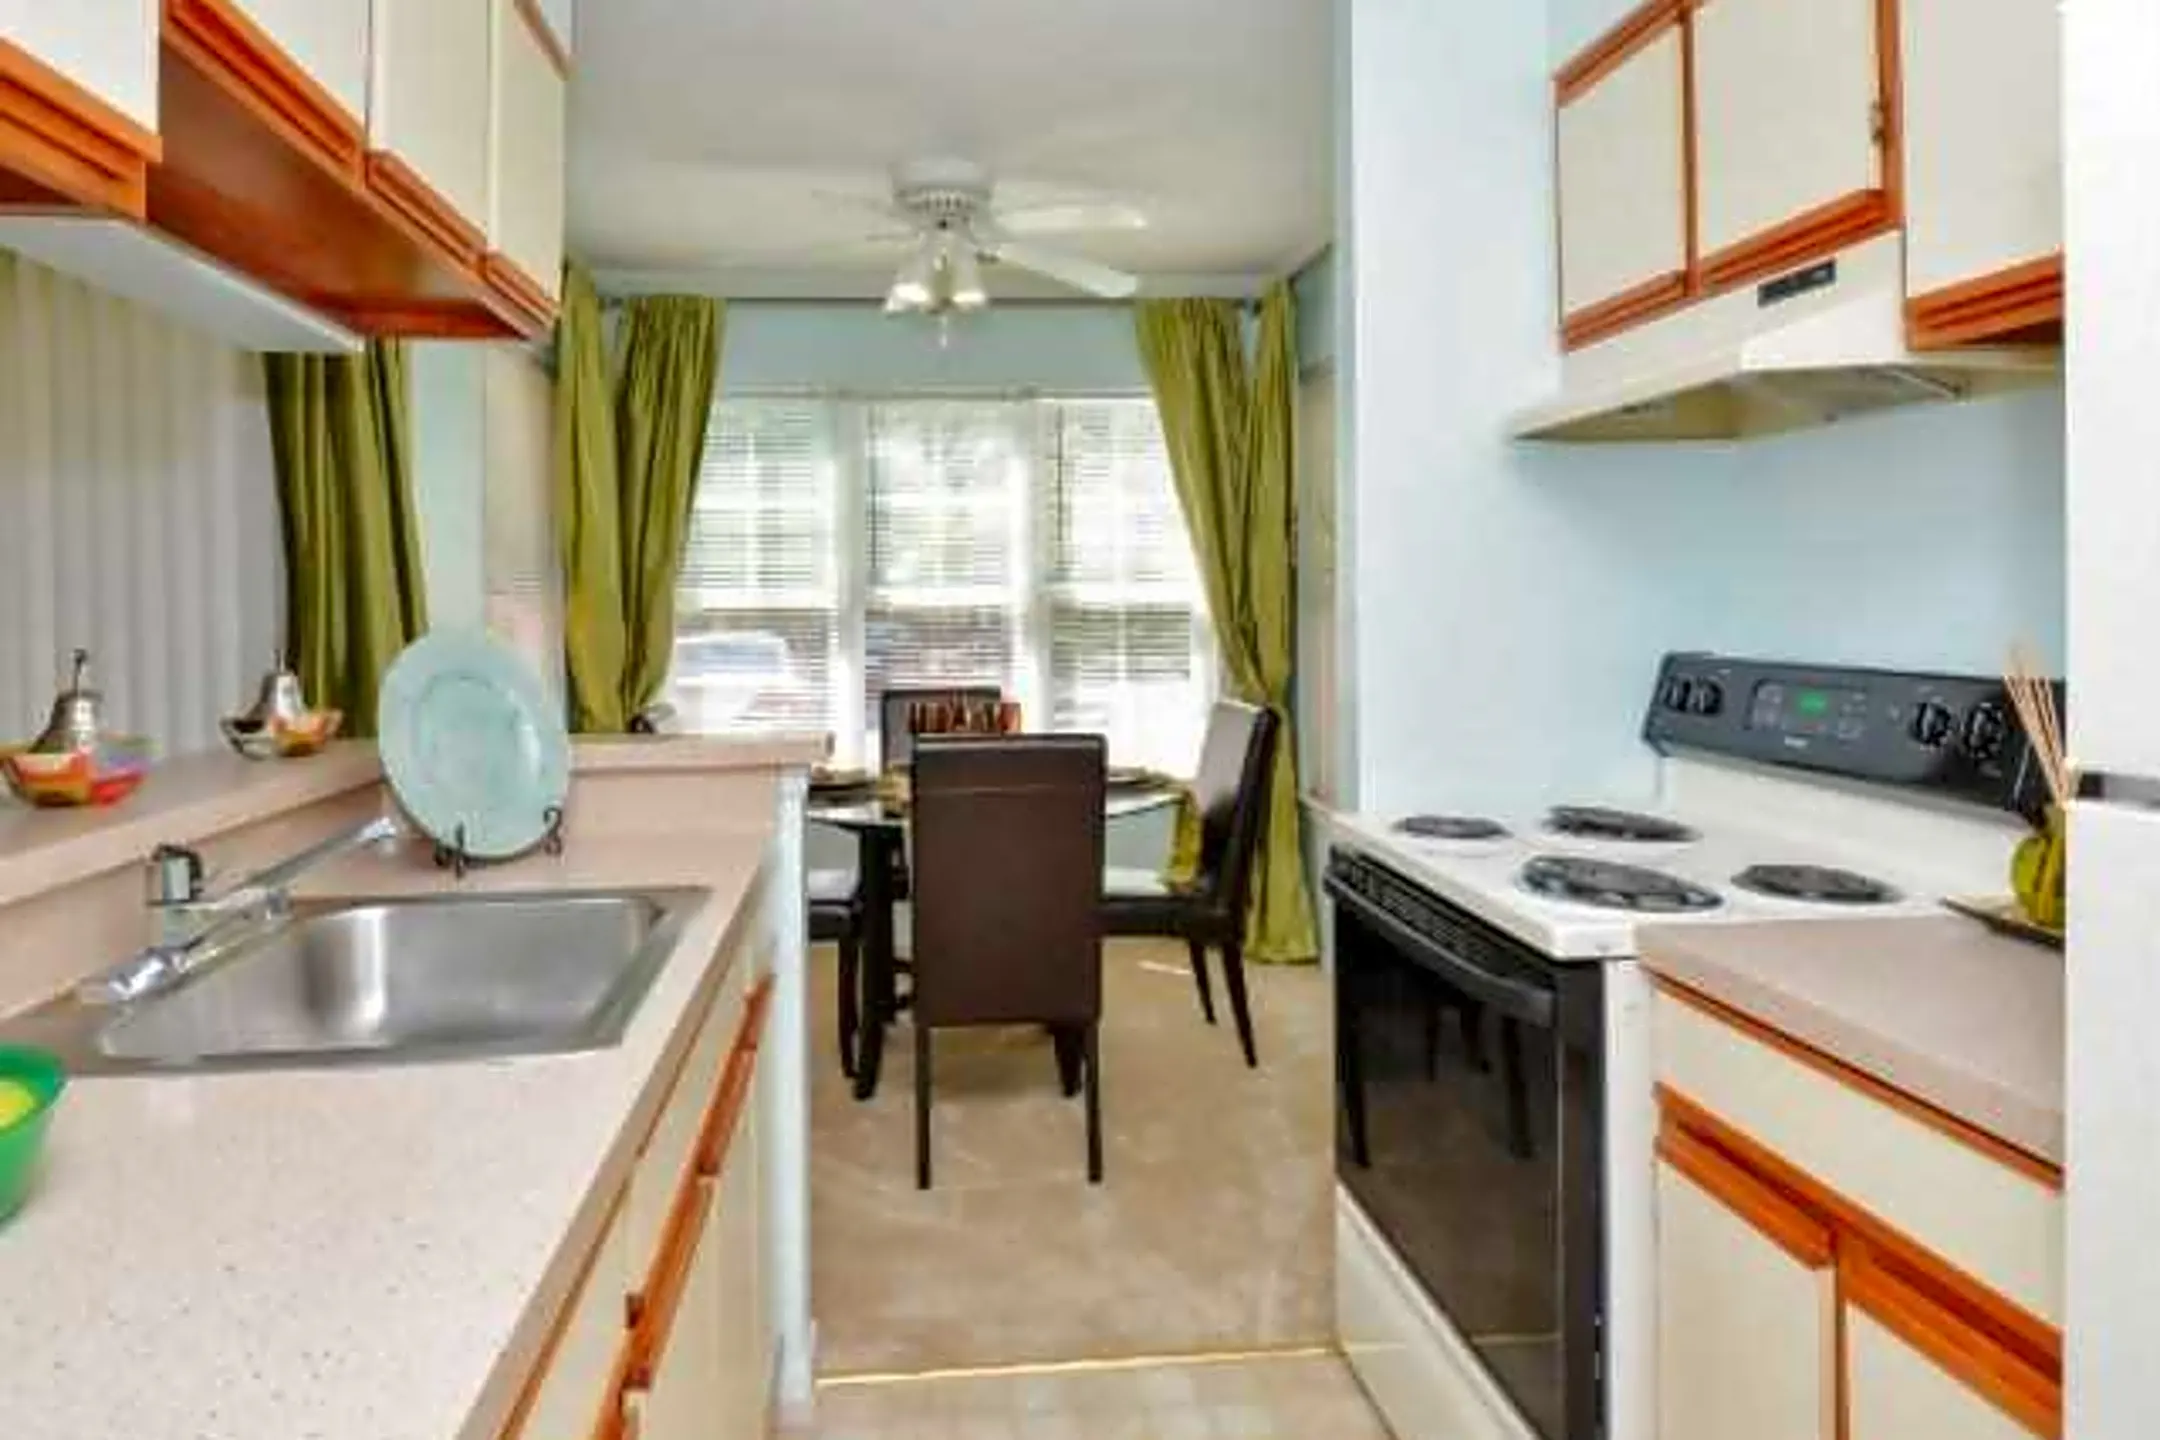 Kitchen - Spring House Apartments - Laurel, MD